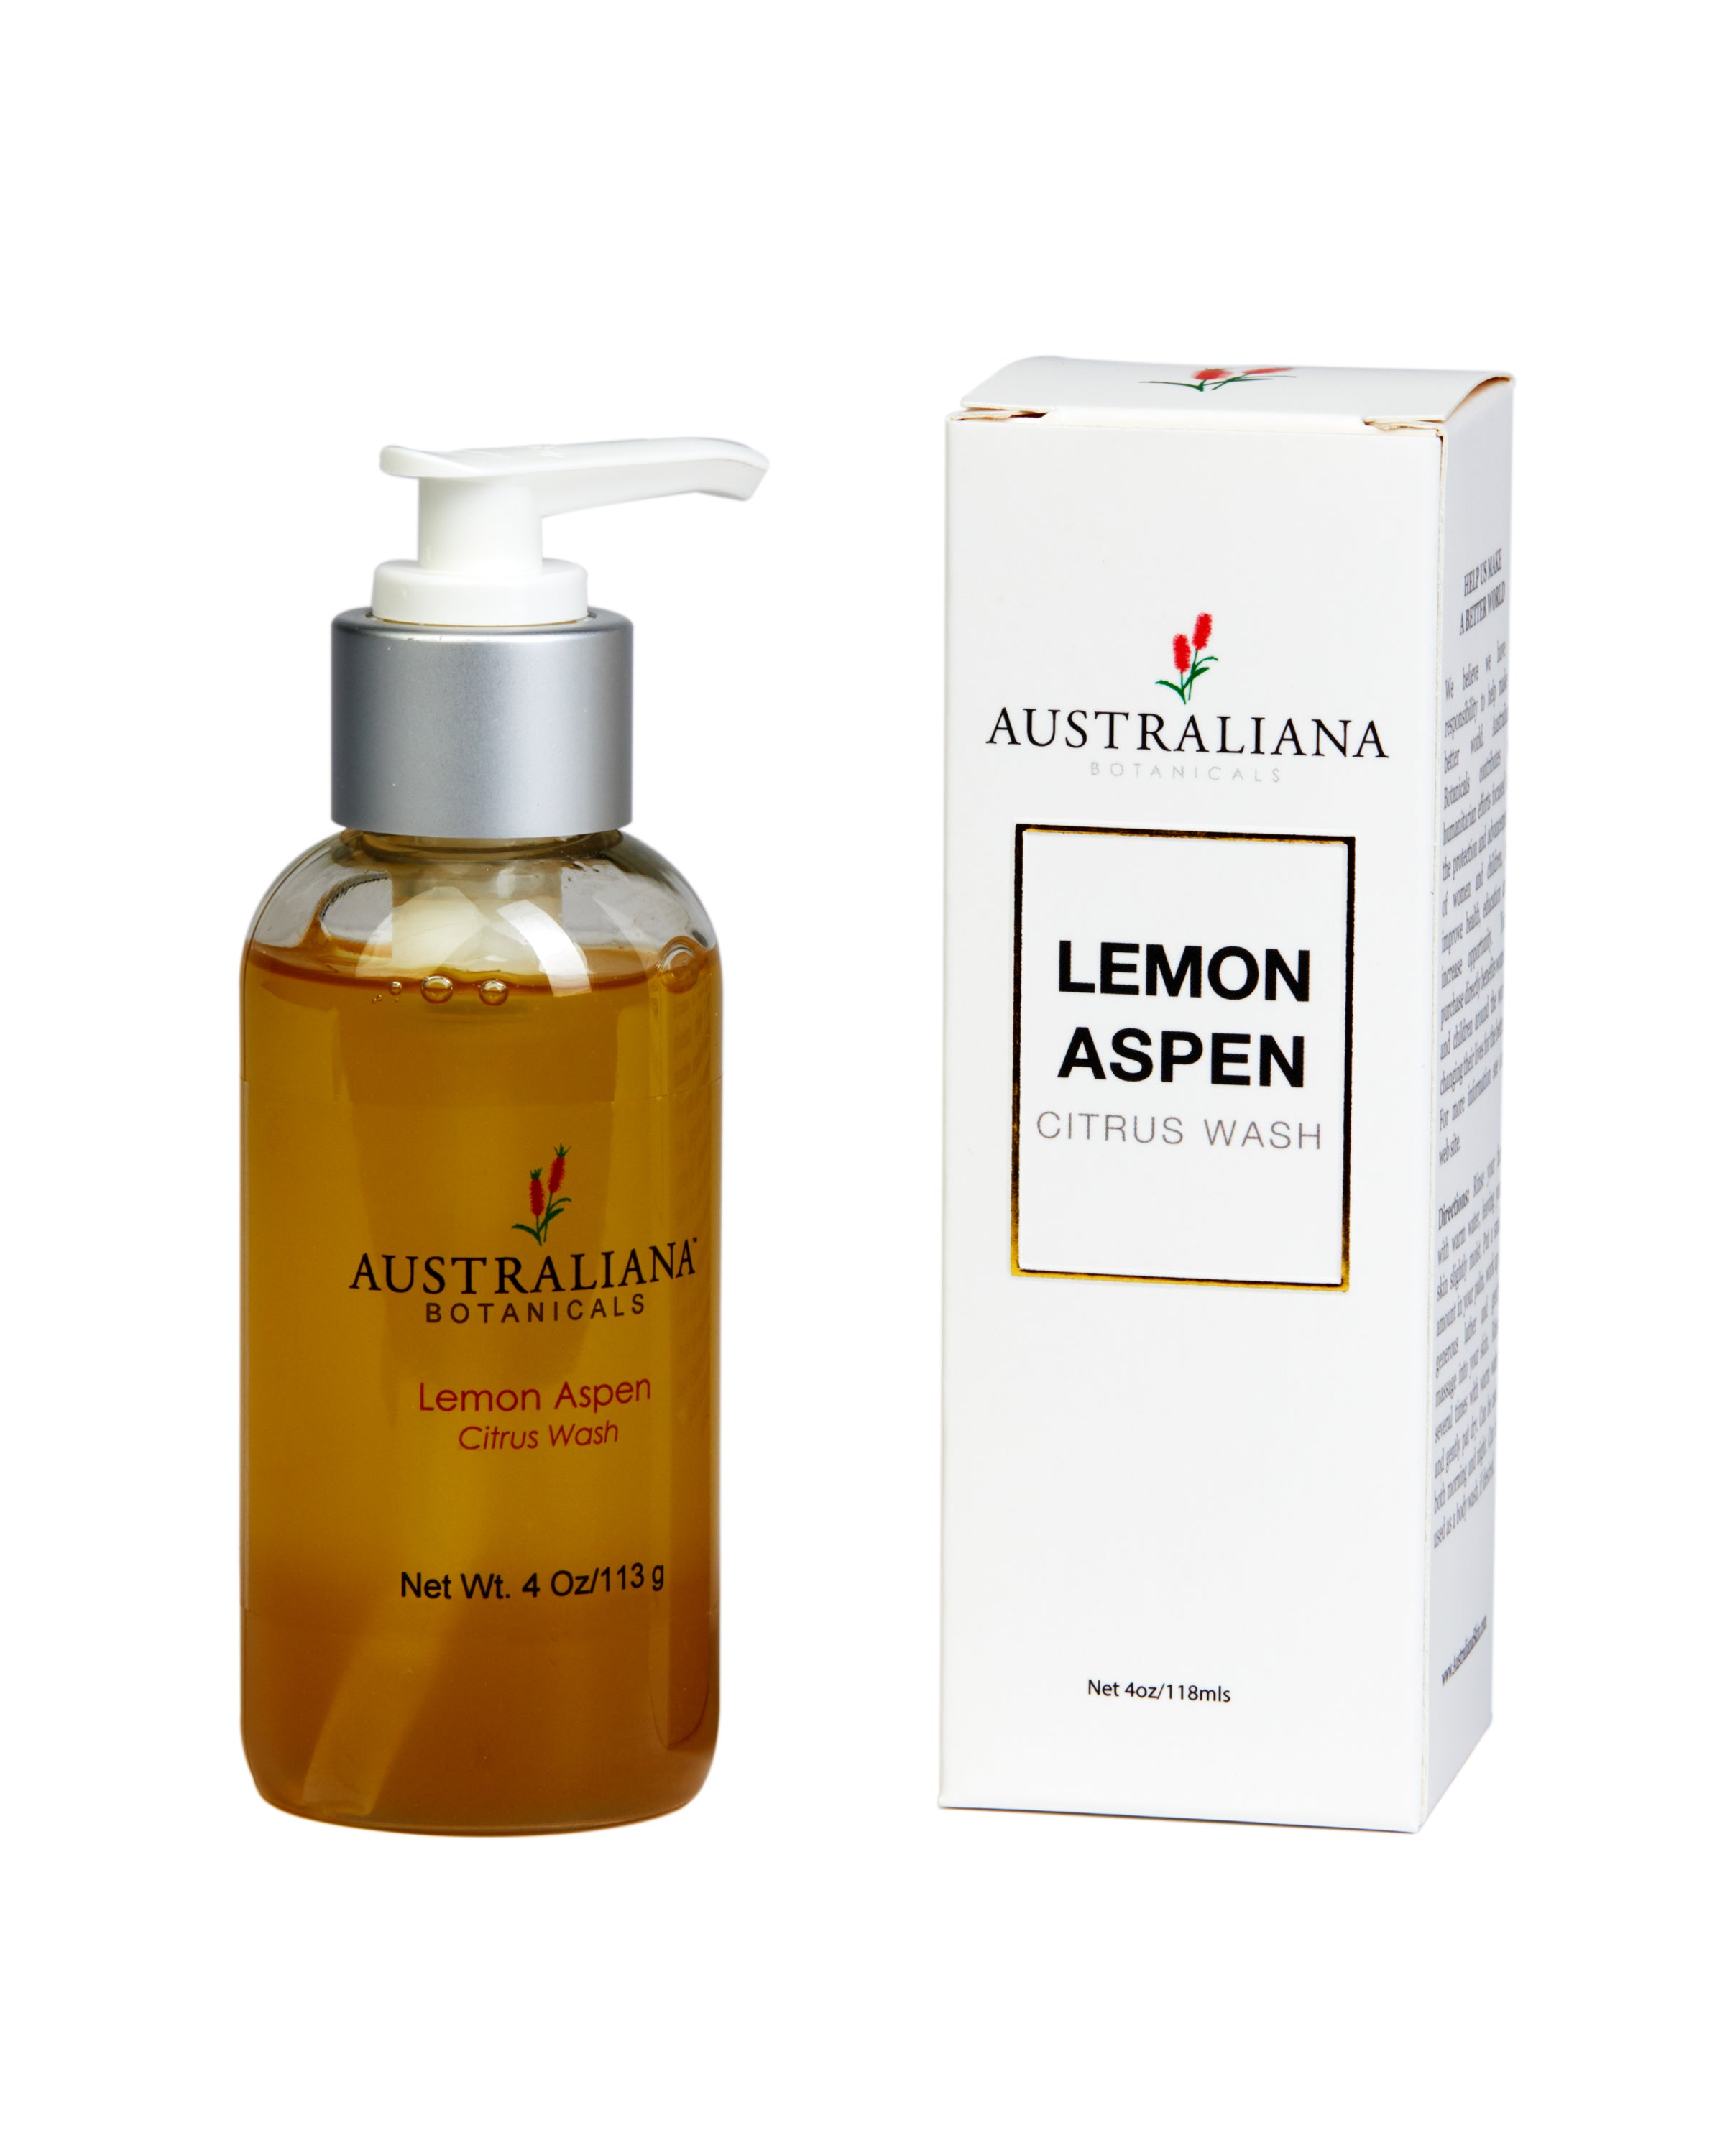 Image of Lemon Aspen Citrus Wash for blog post on skin care cleansing for acne sufferers.